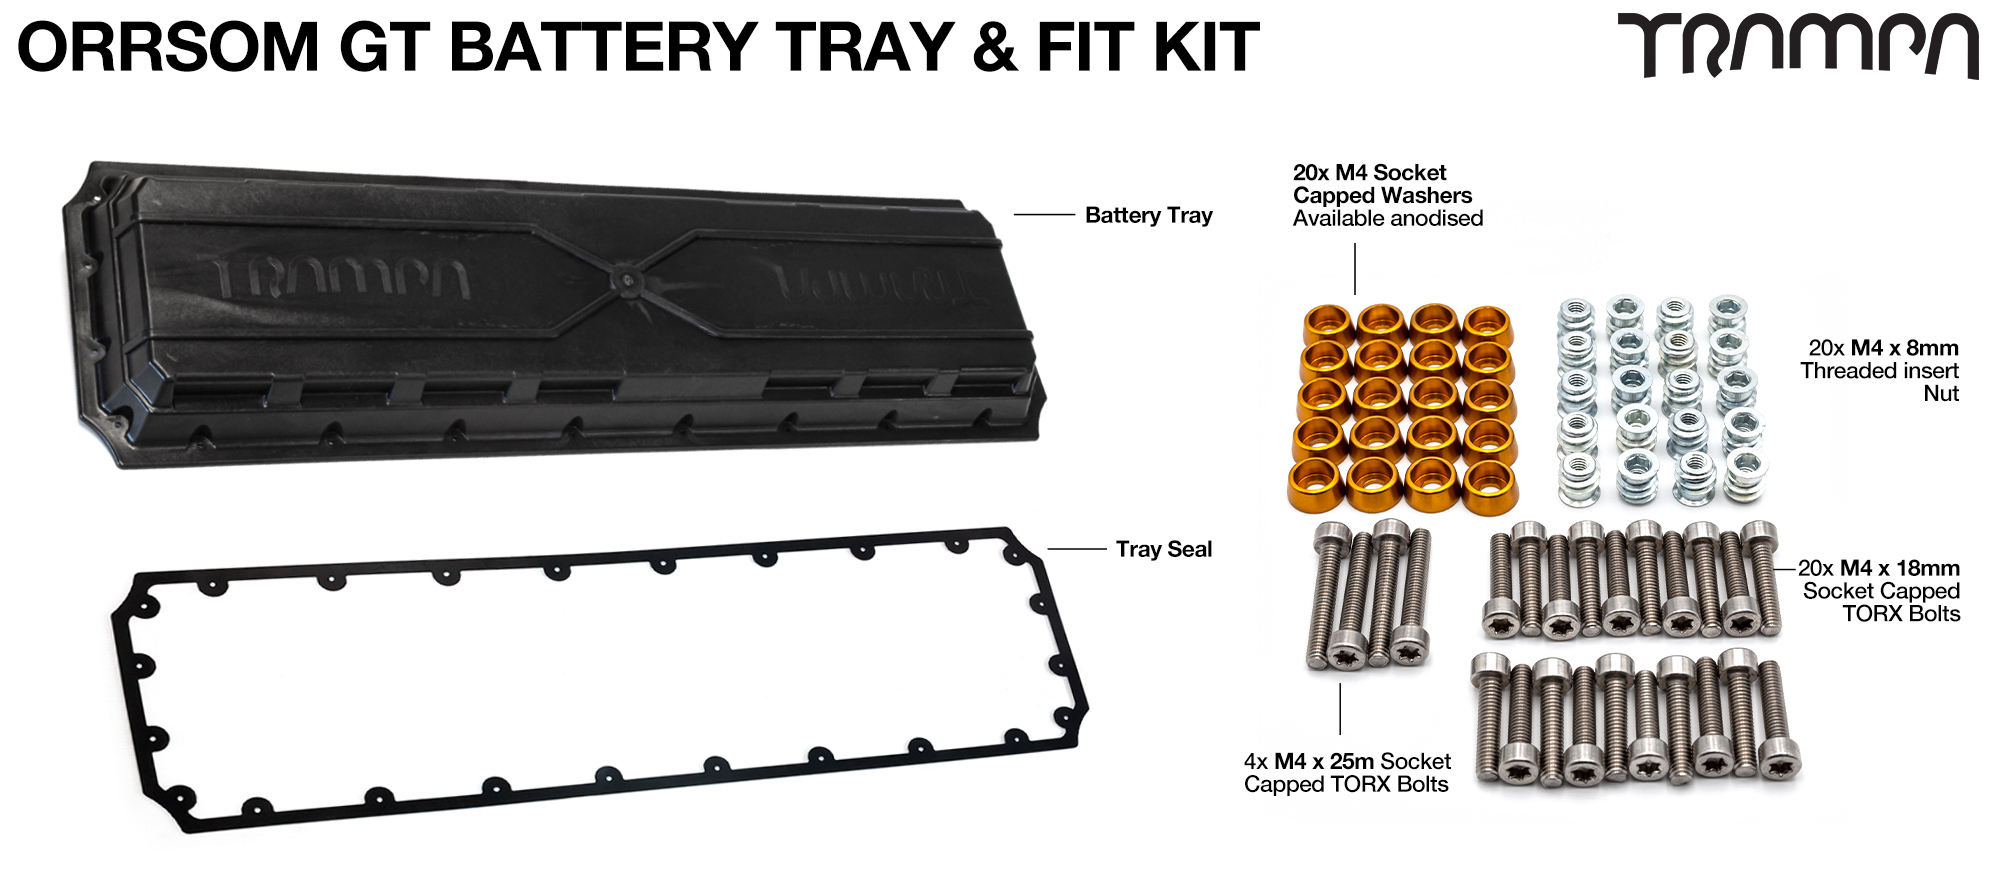 ORRSOM GT BATTERY Tray & fix kit